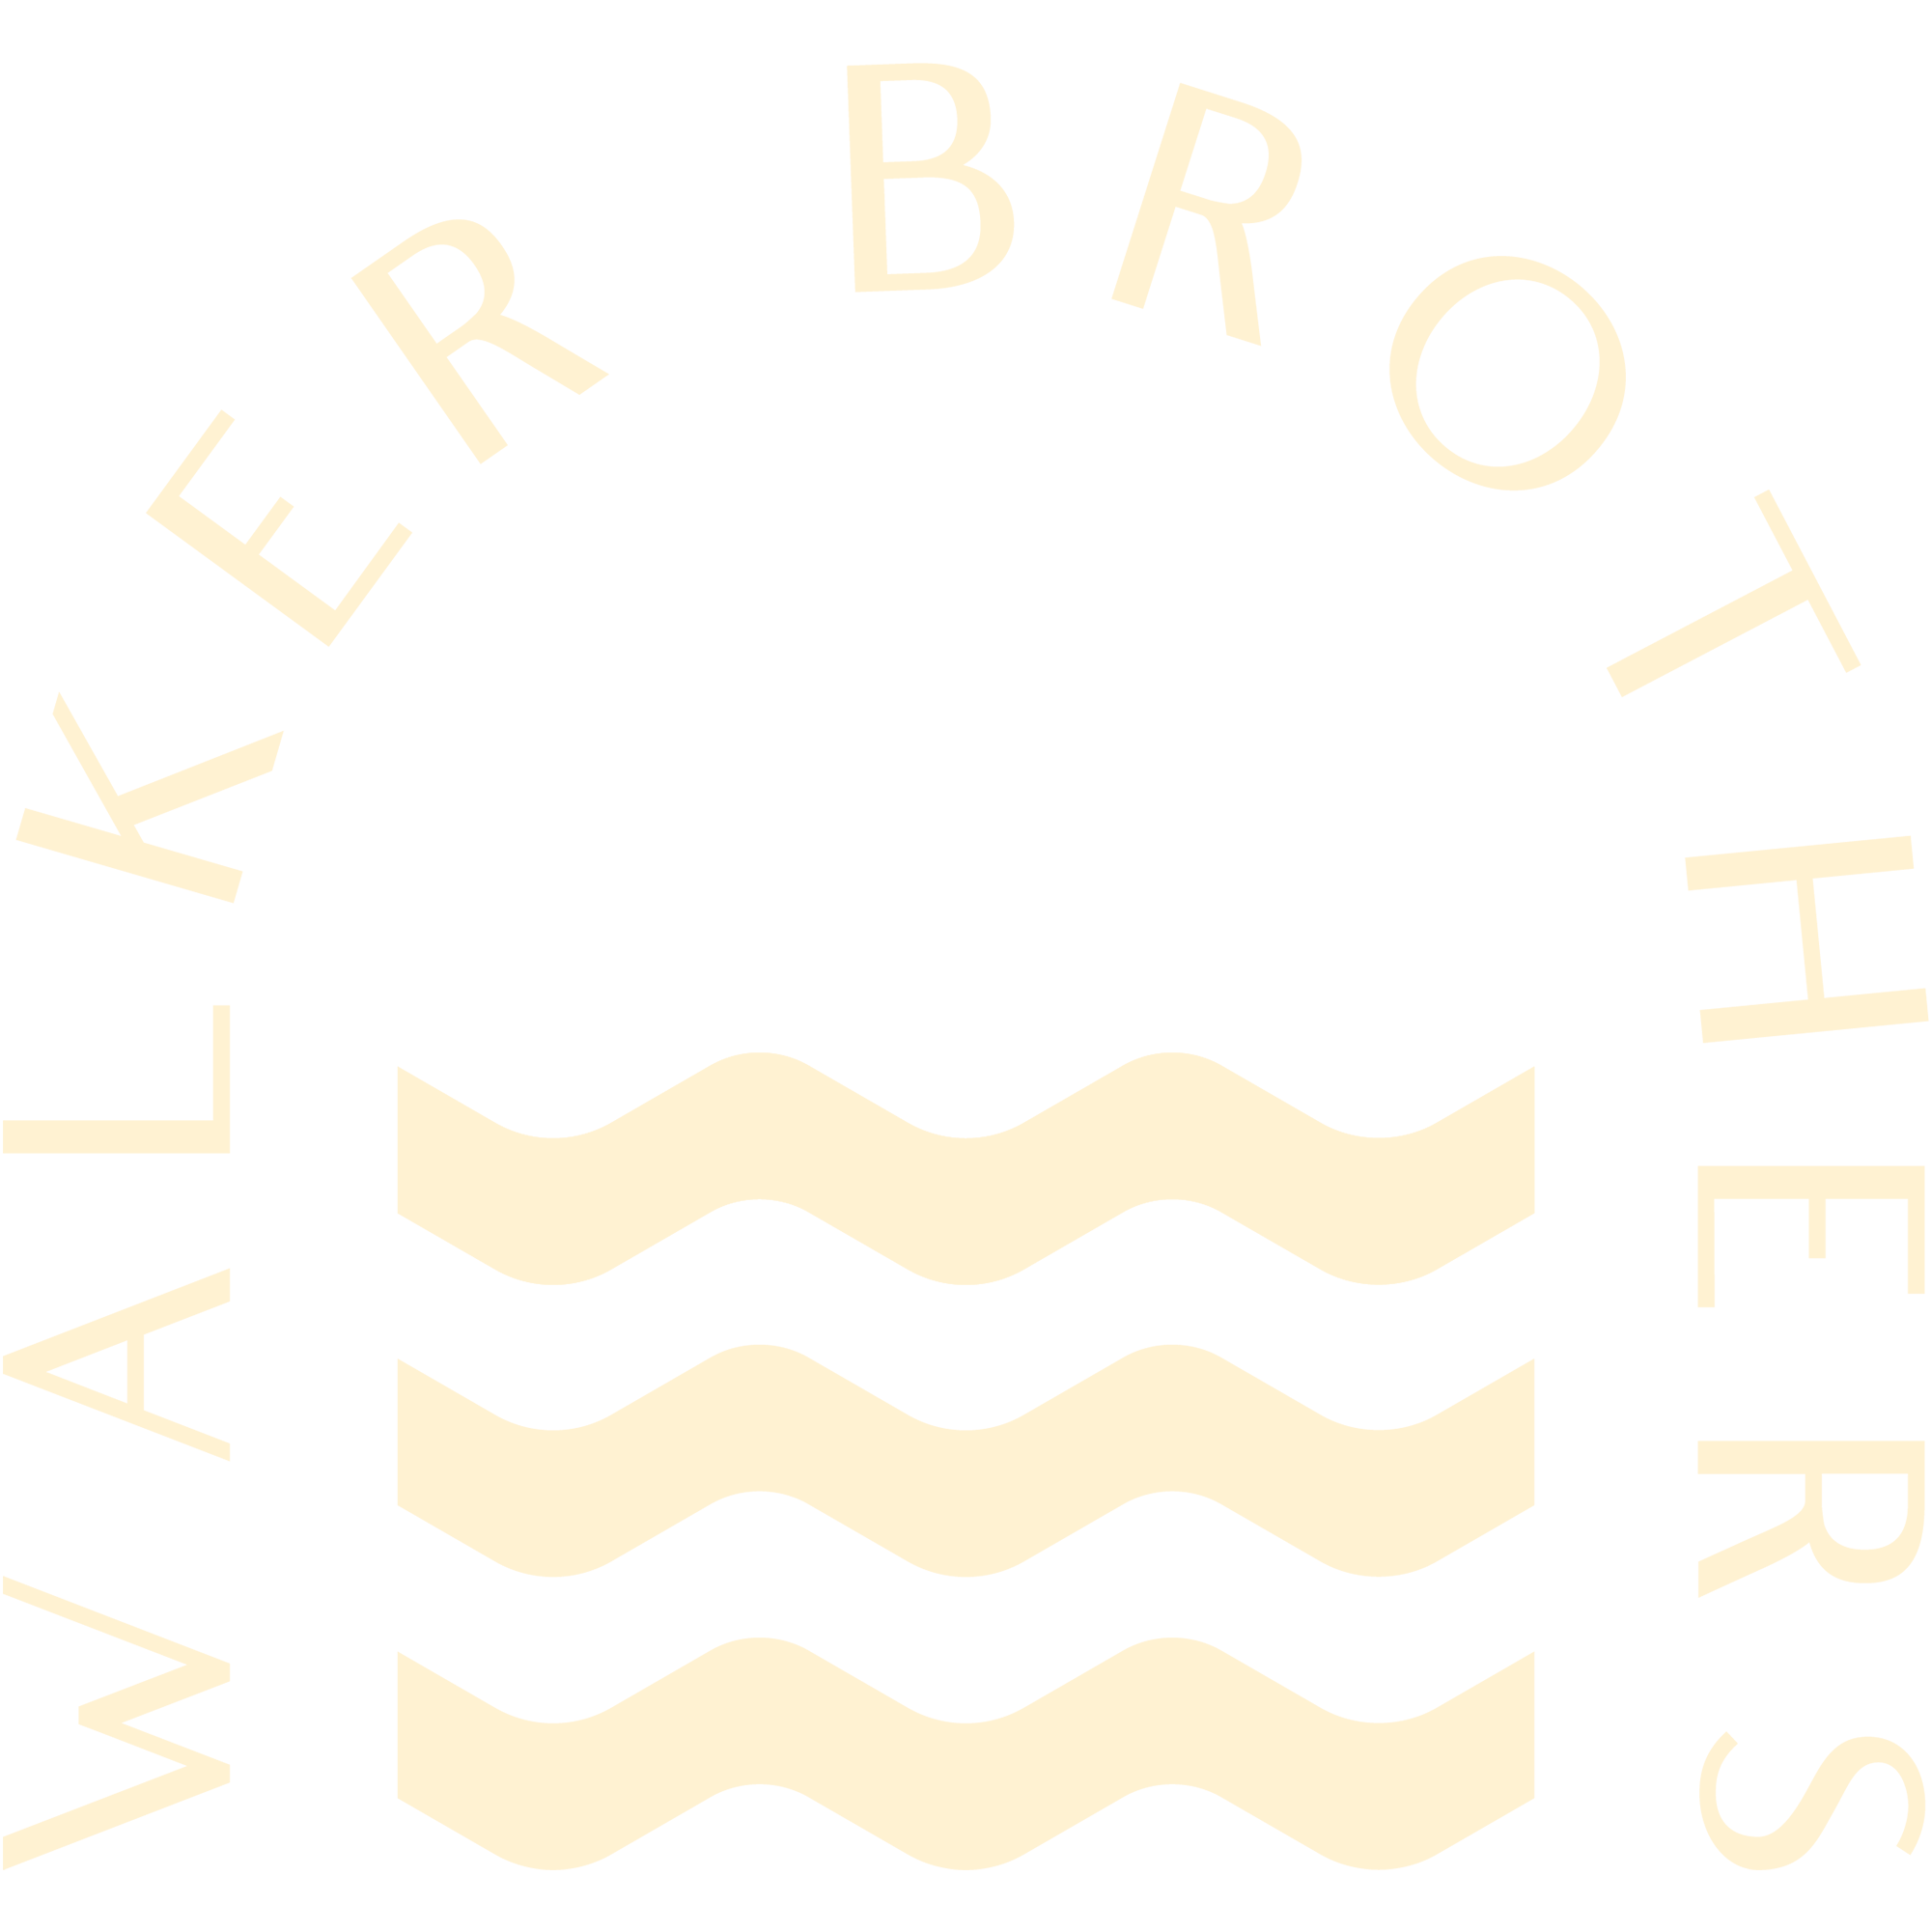 Walker Bros logo tan